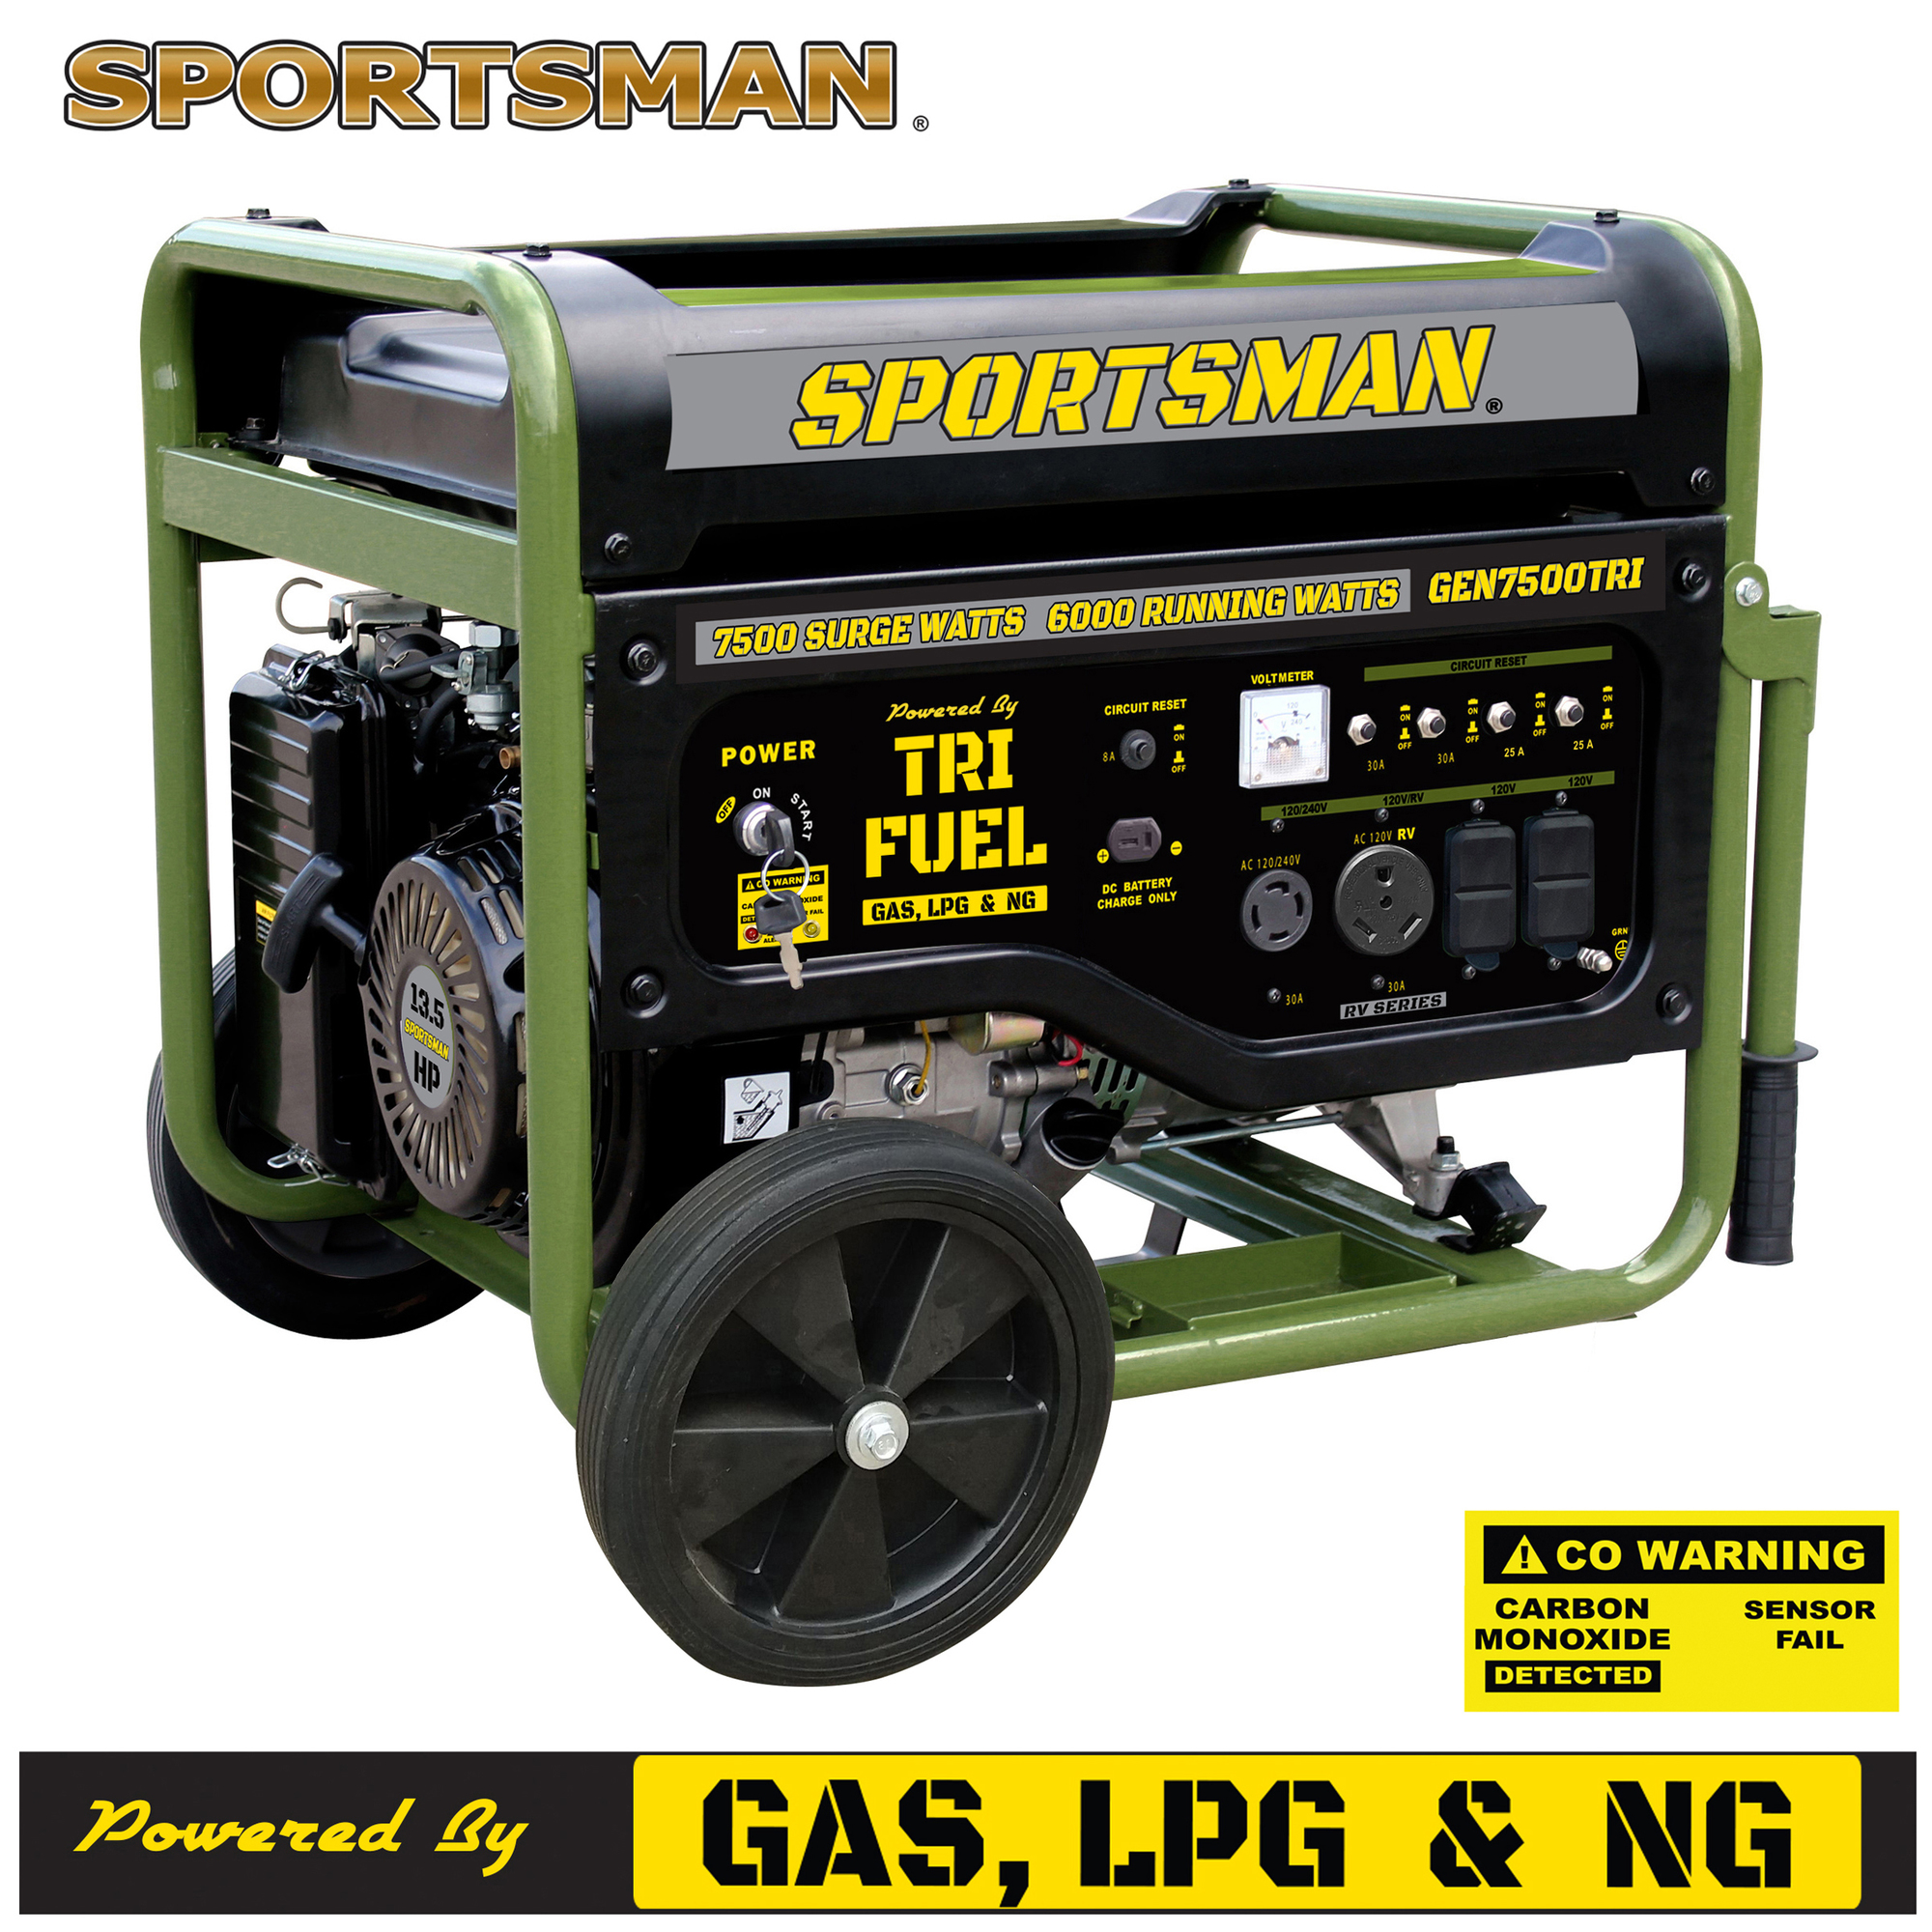 Sportsman, 7500 Watt Portable Tri-Fuel Generator, Voltage 120/240 Model GEN7500TRI